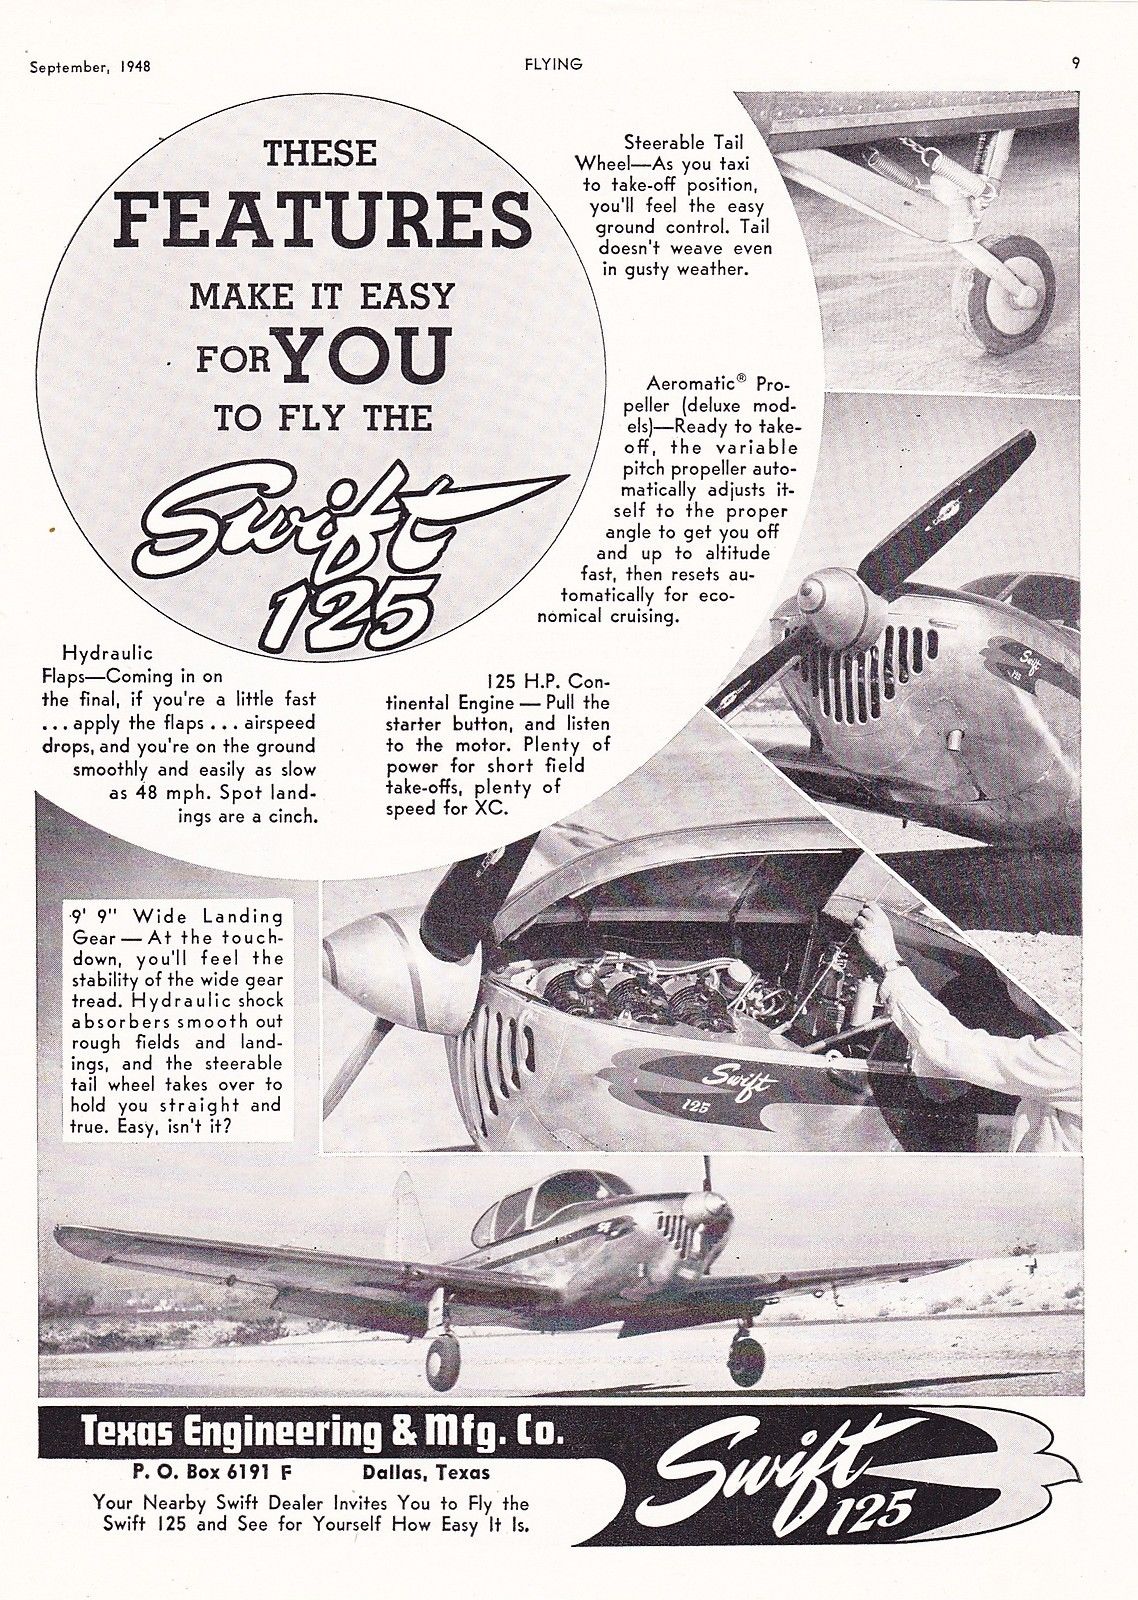 1948-Tenco-Swift-125-Aircraft-ad-9-26-16e1.jpg